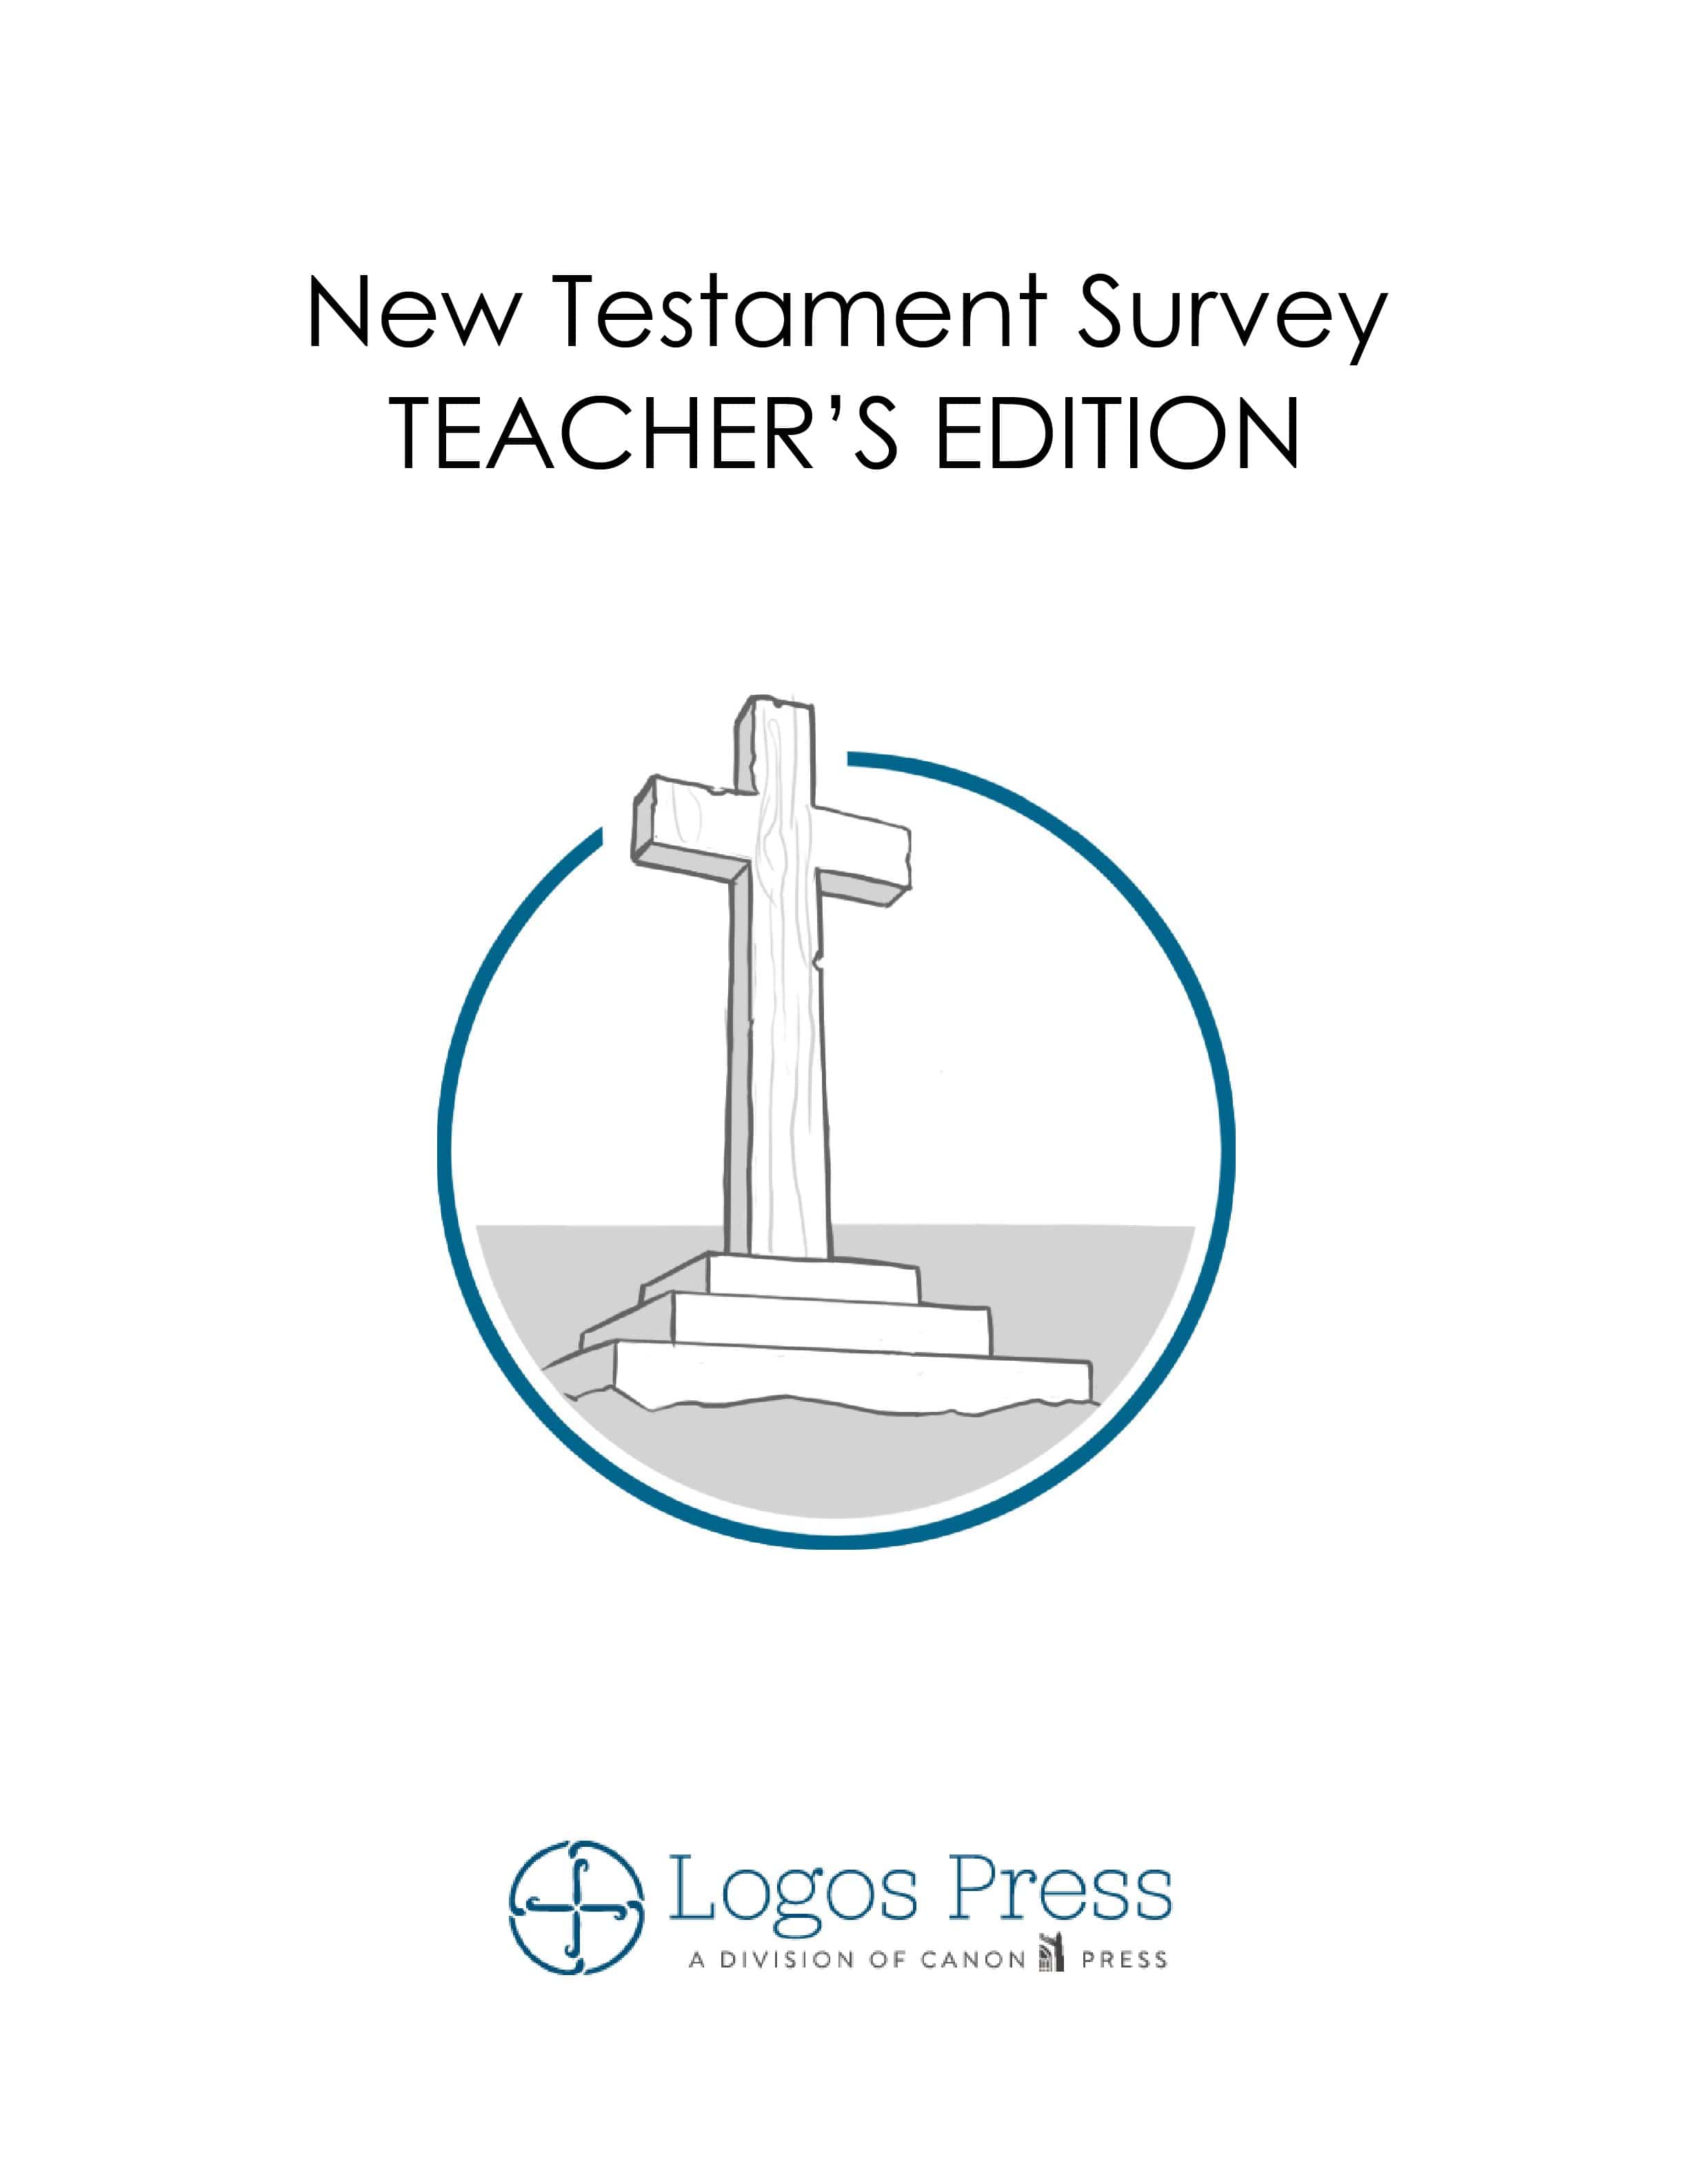 New Testament Survey - Teacher's Edition